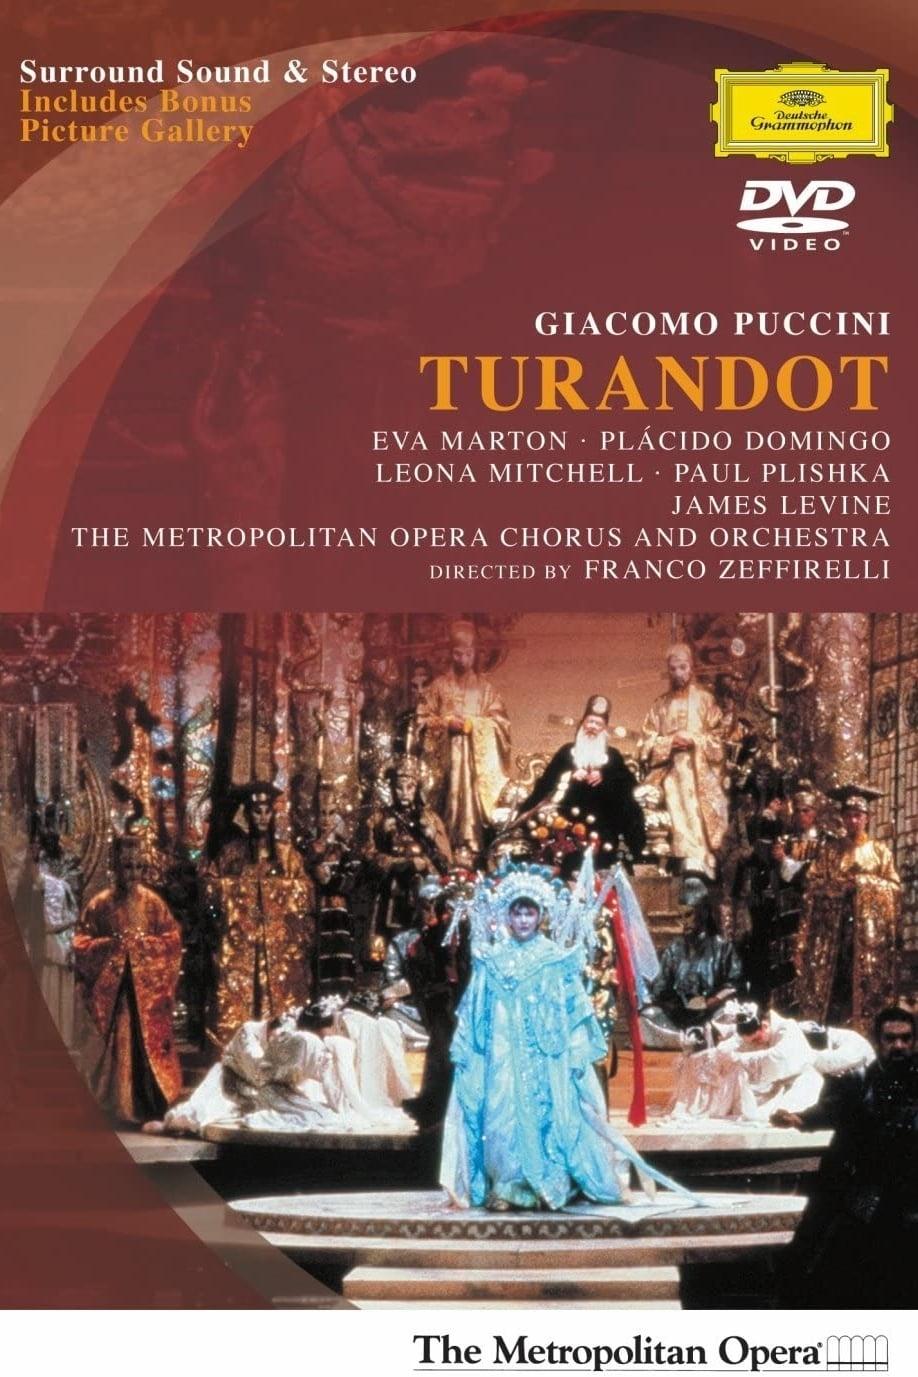 Turandot poster